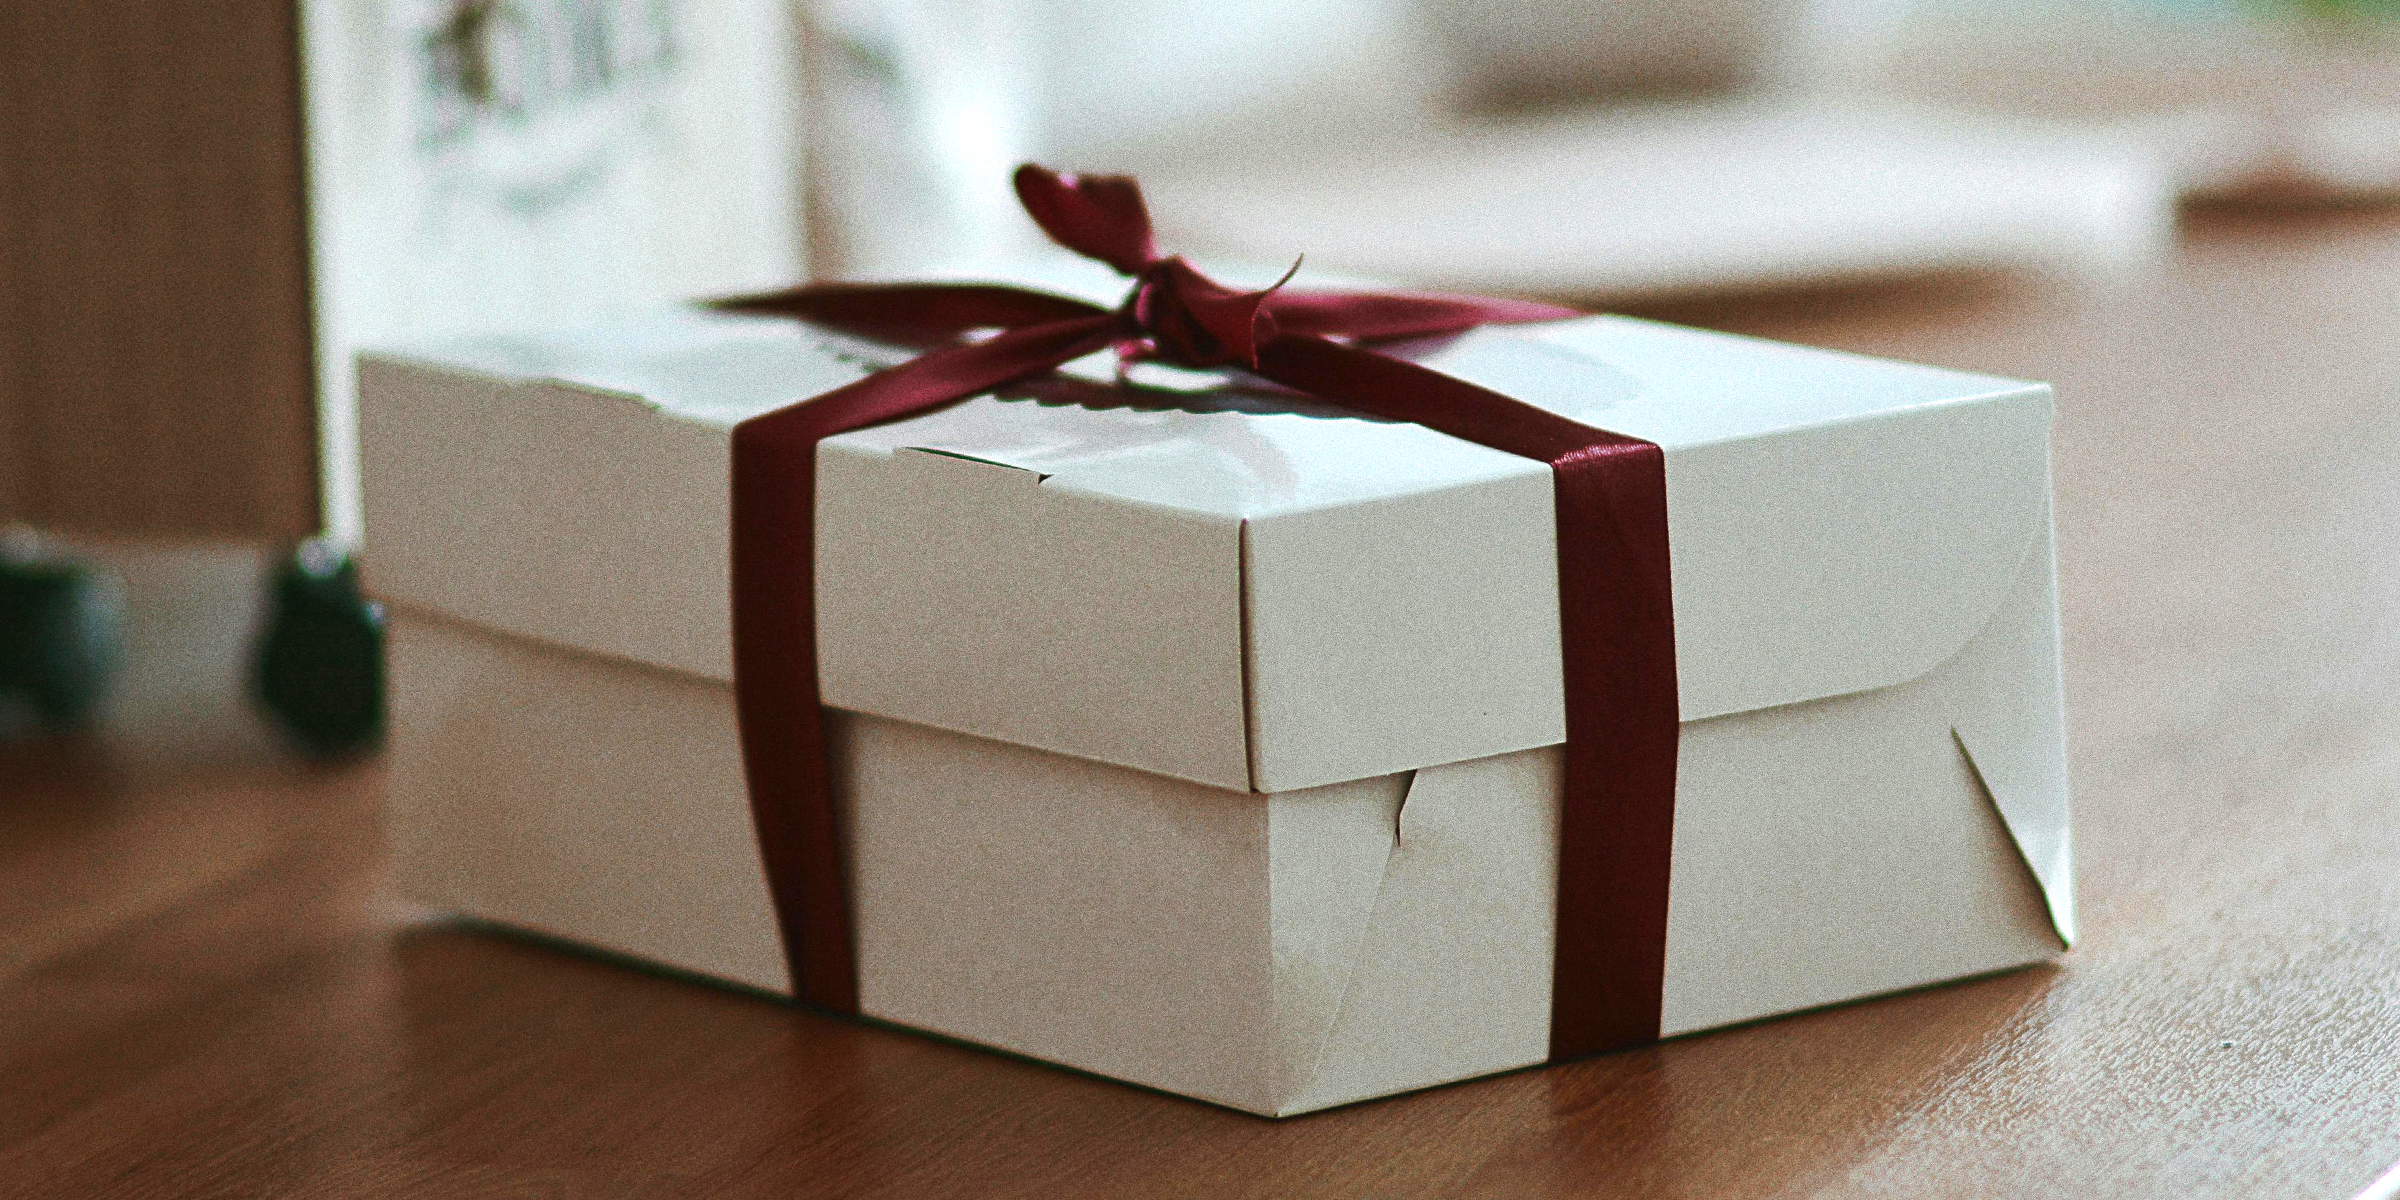 A gift box | Source: pexels.com/nastyaankudinova